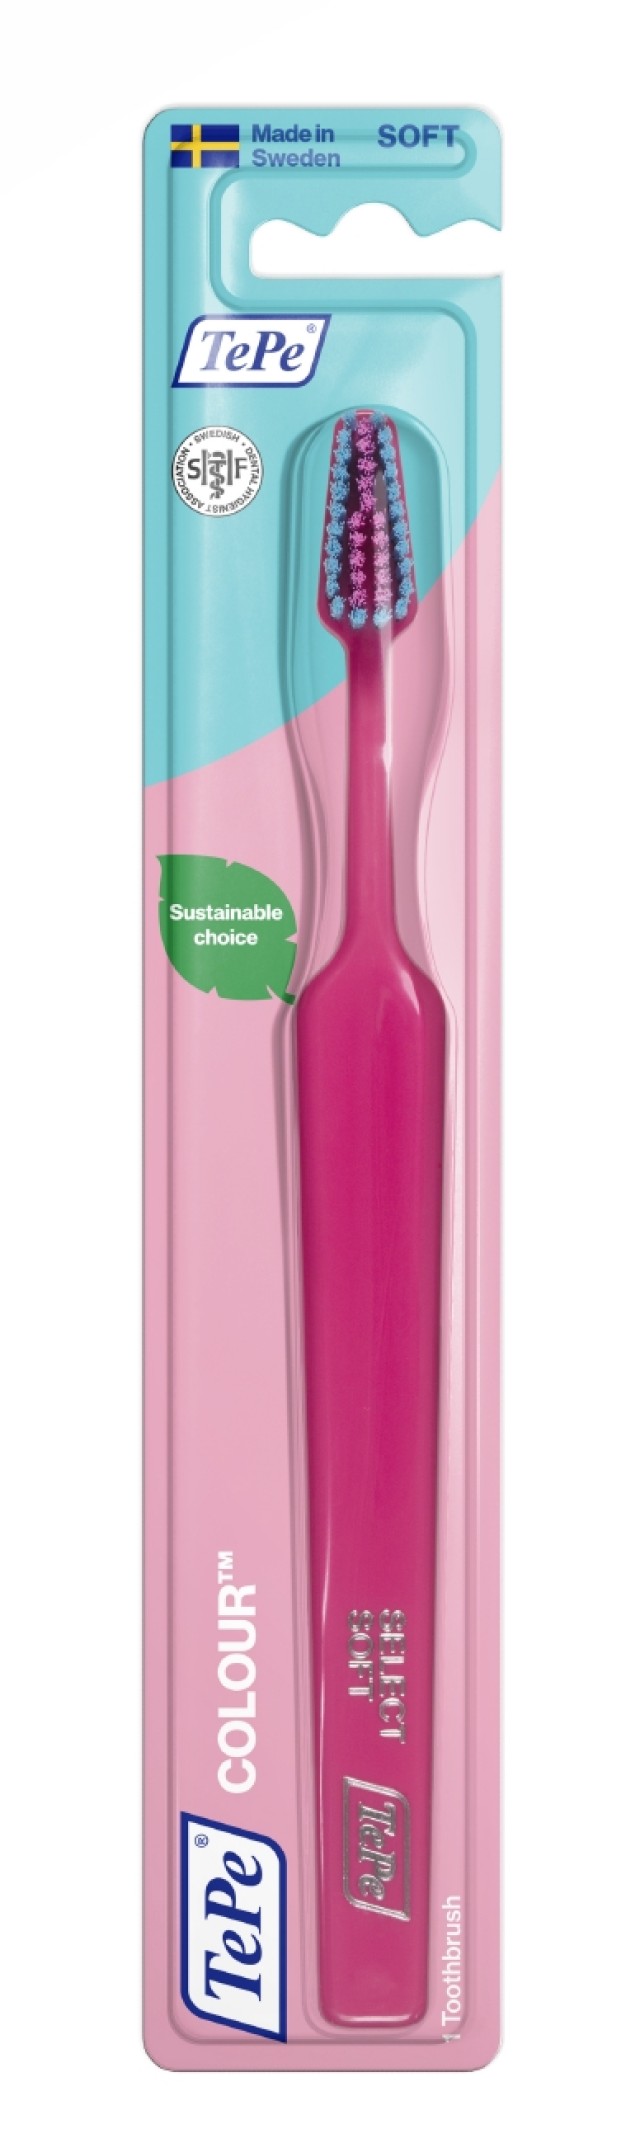 TePe Colour Soft Pink Blister, Οδοντόβουρτσα Μαλακή Ροζ 1τμχ